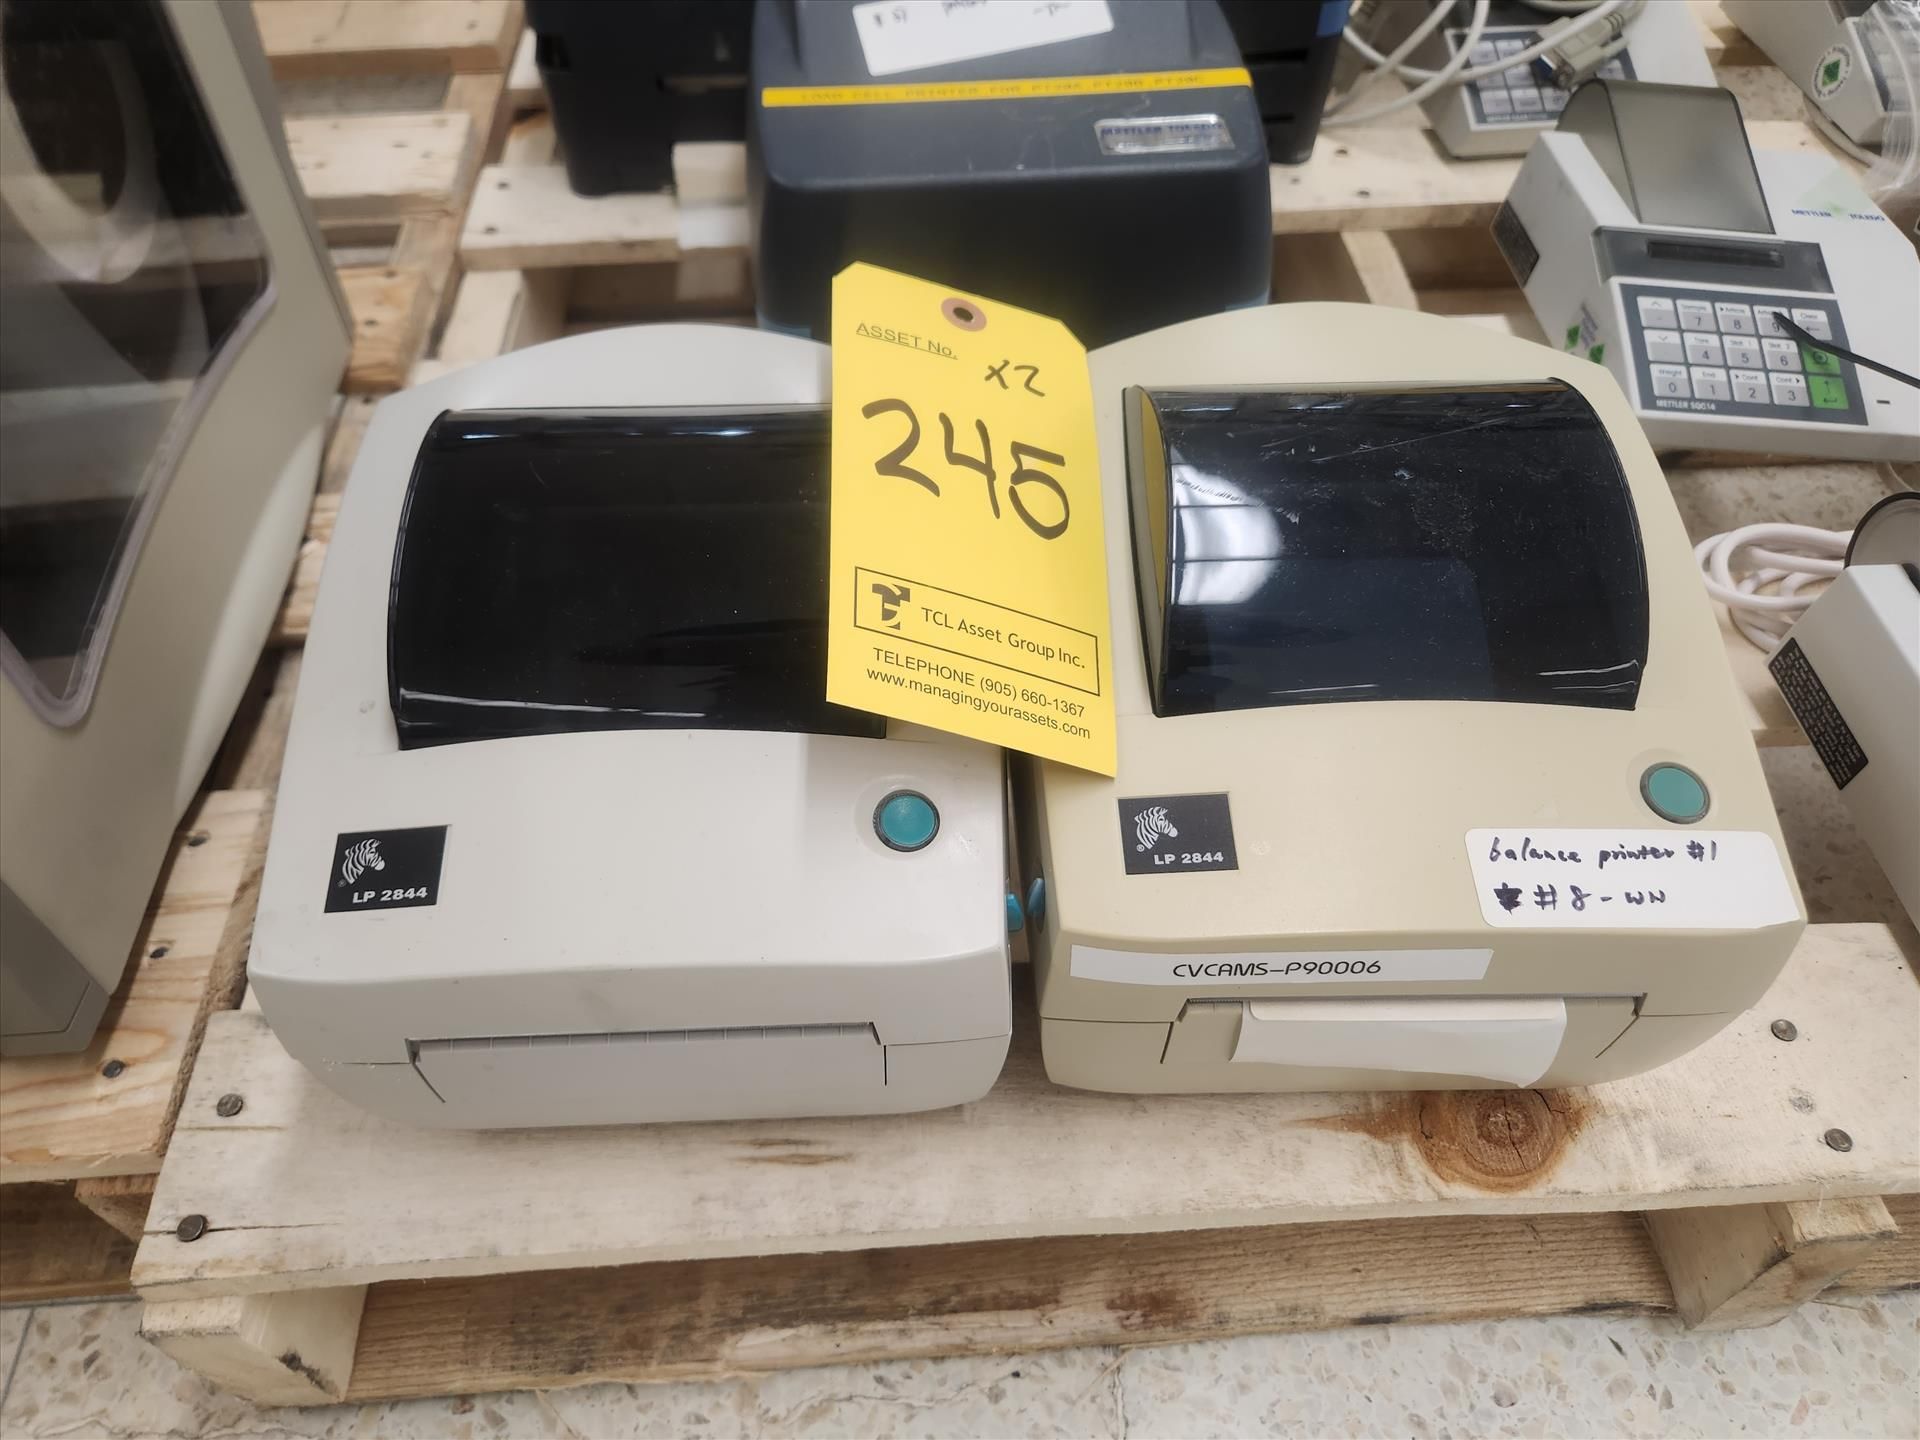 (2) Zebra printers, mod. LP2844 (excluding cords)